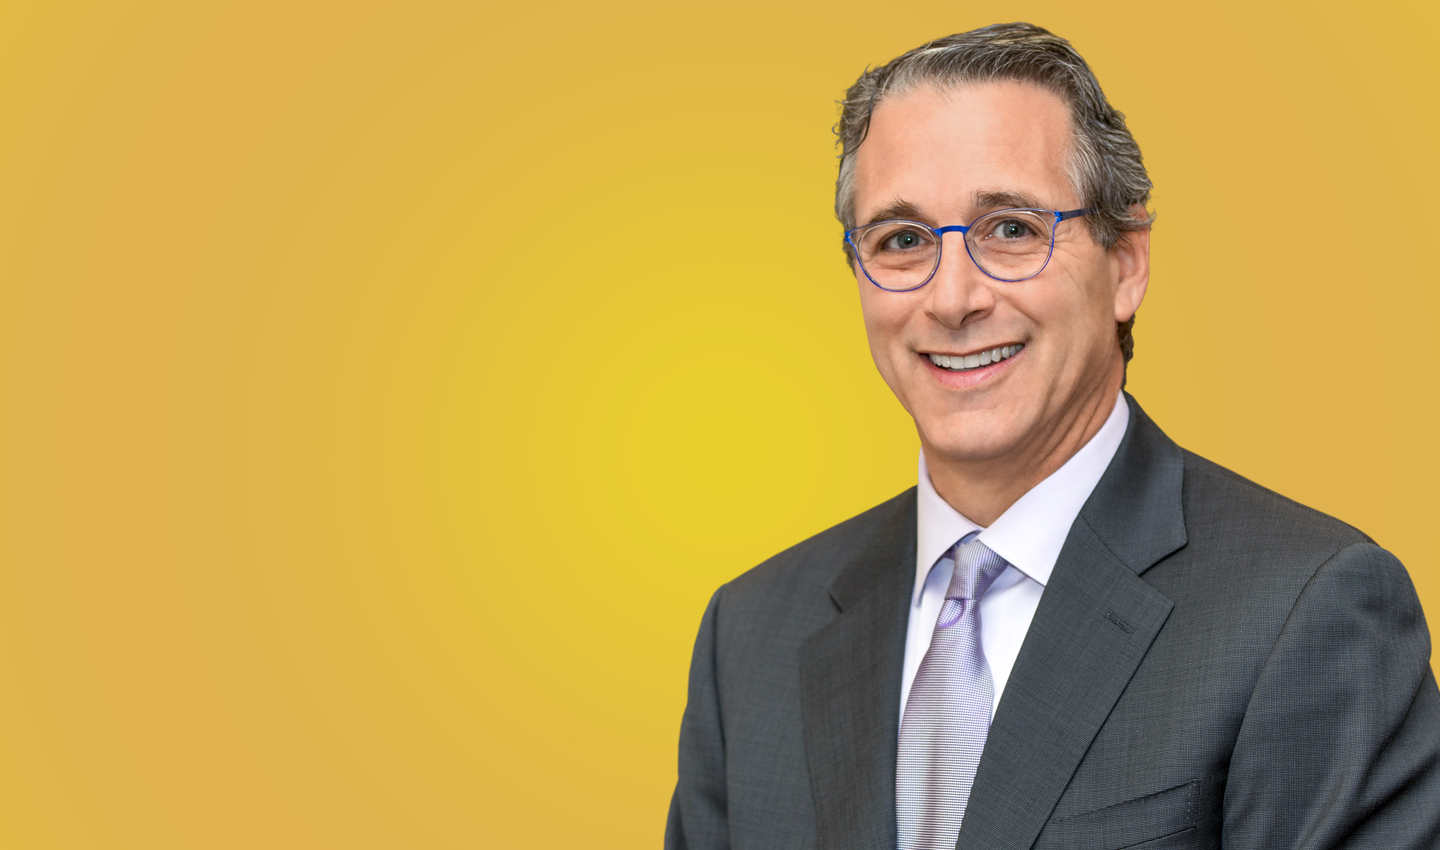 Dr. Paul Krawitz portrait on yellow background